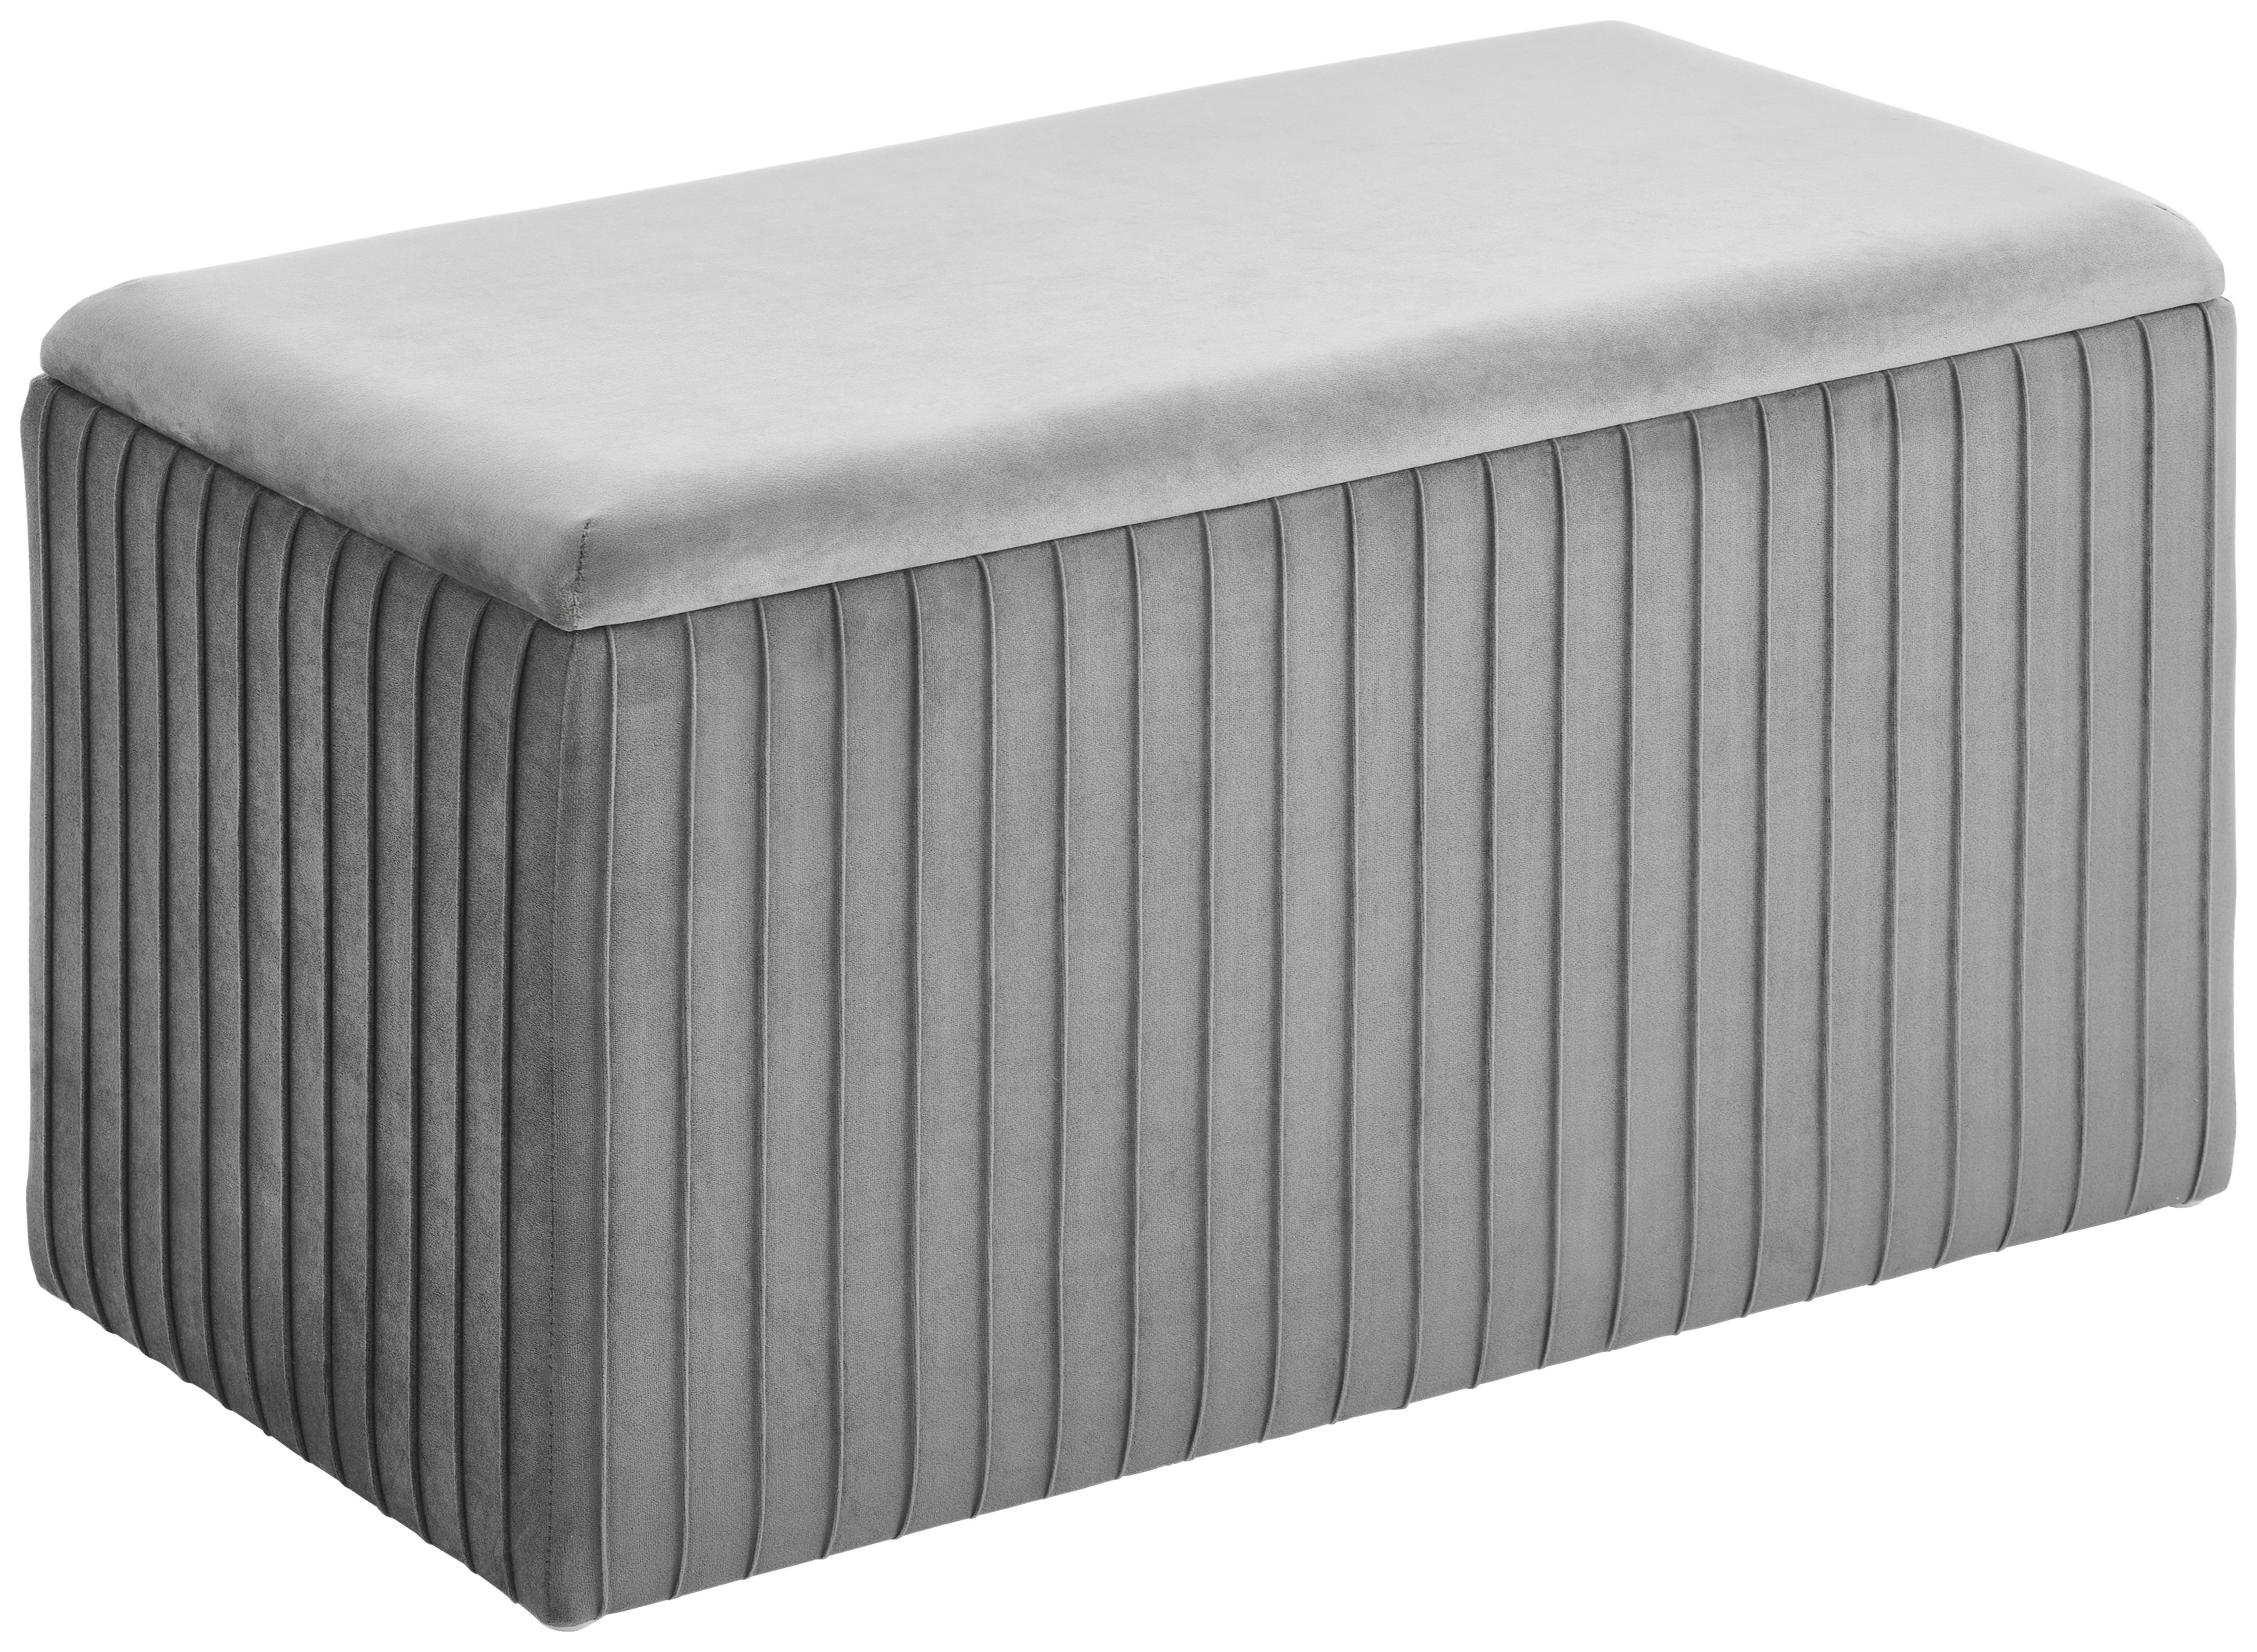 Xora SEDACÍ BOX, dřevo, textil, 75/40/40 cm - šedá